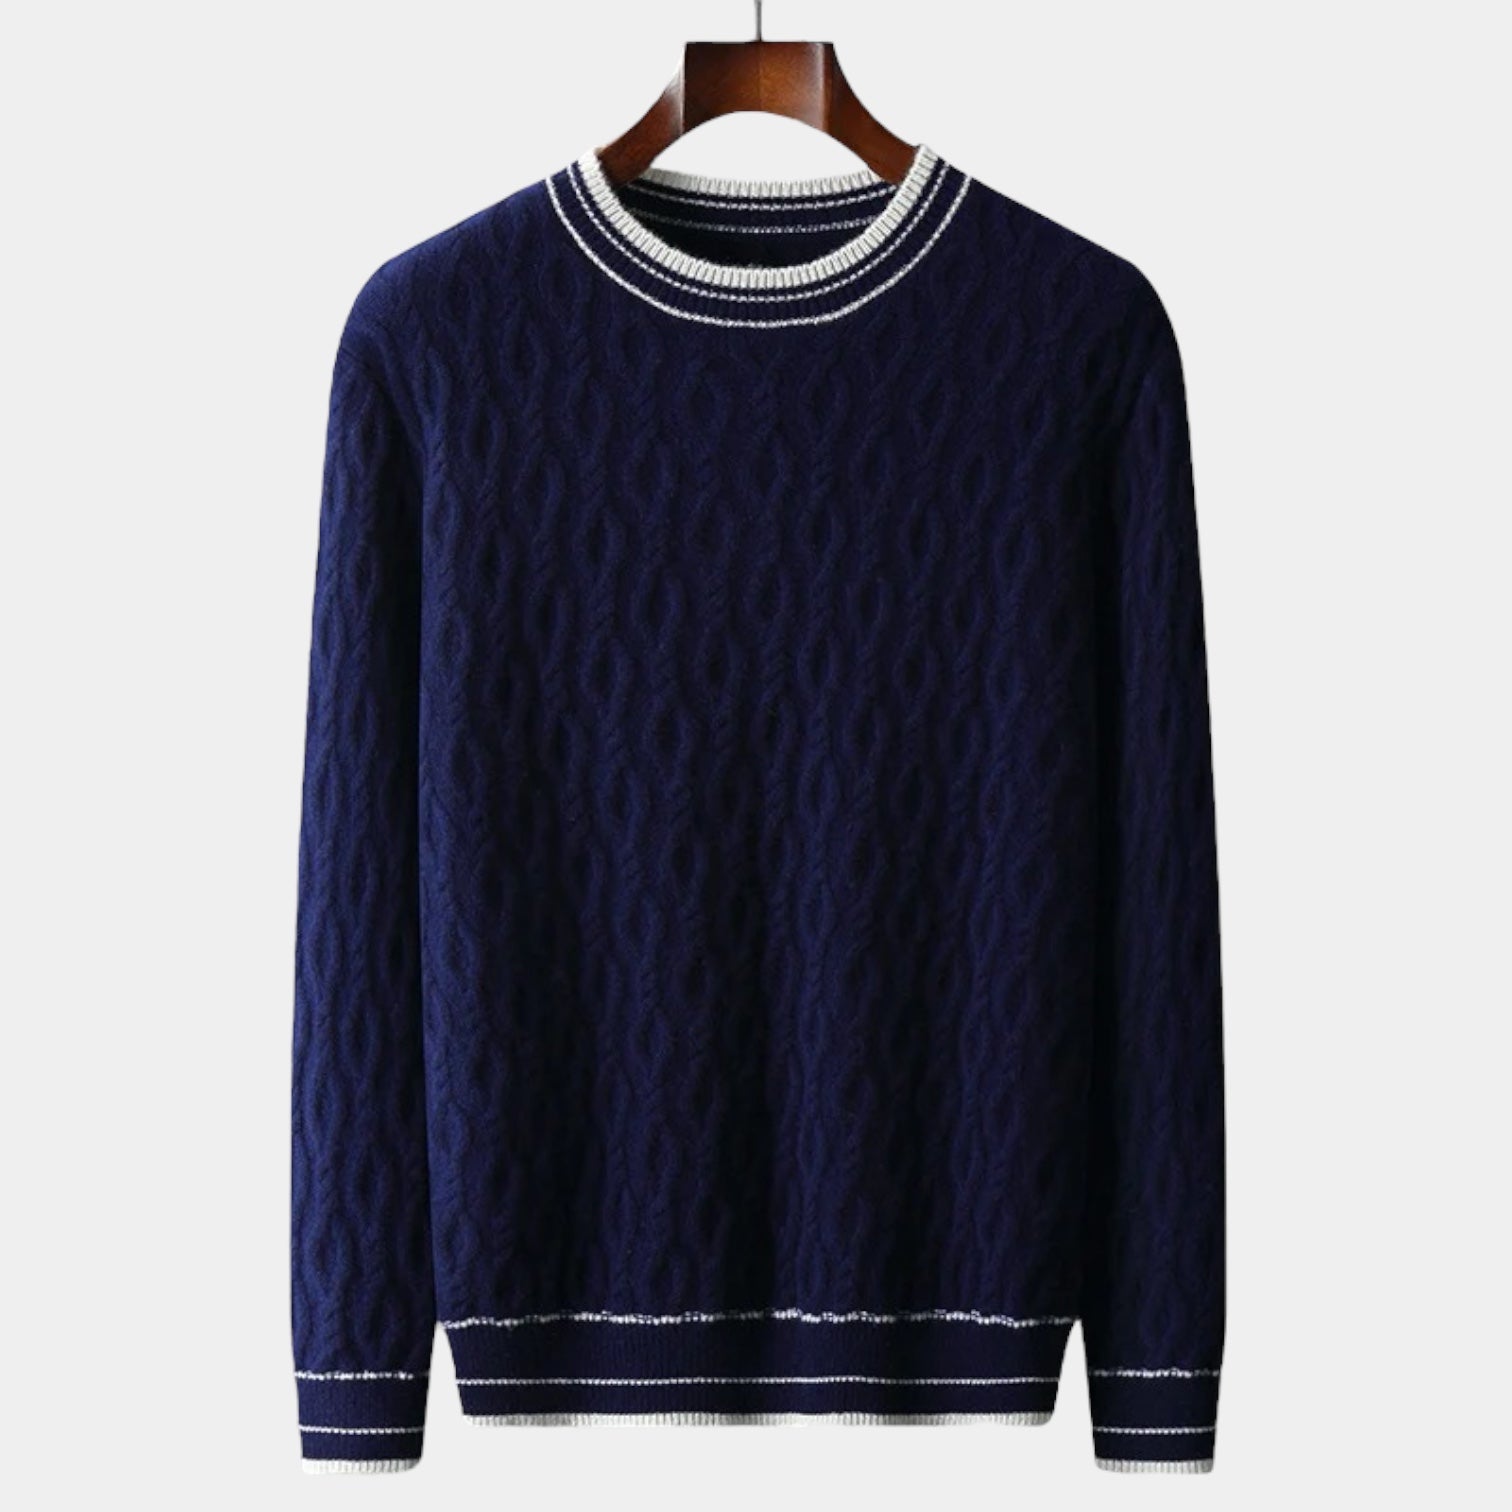 OLD MONEY Merino Wool Round Neck Knitted Sweater - WEAR OLD MONEY